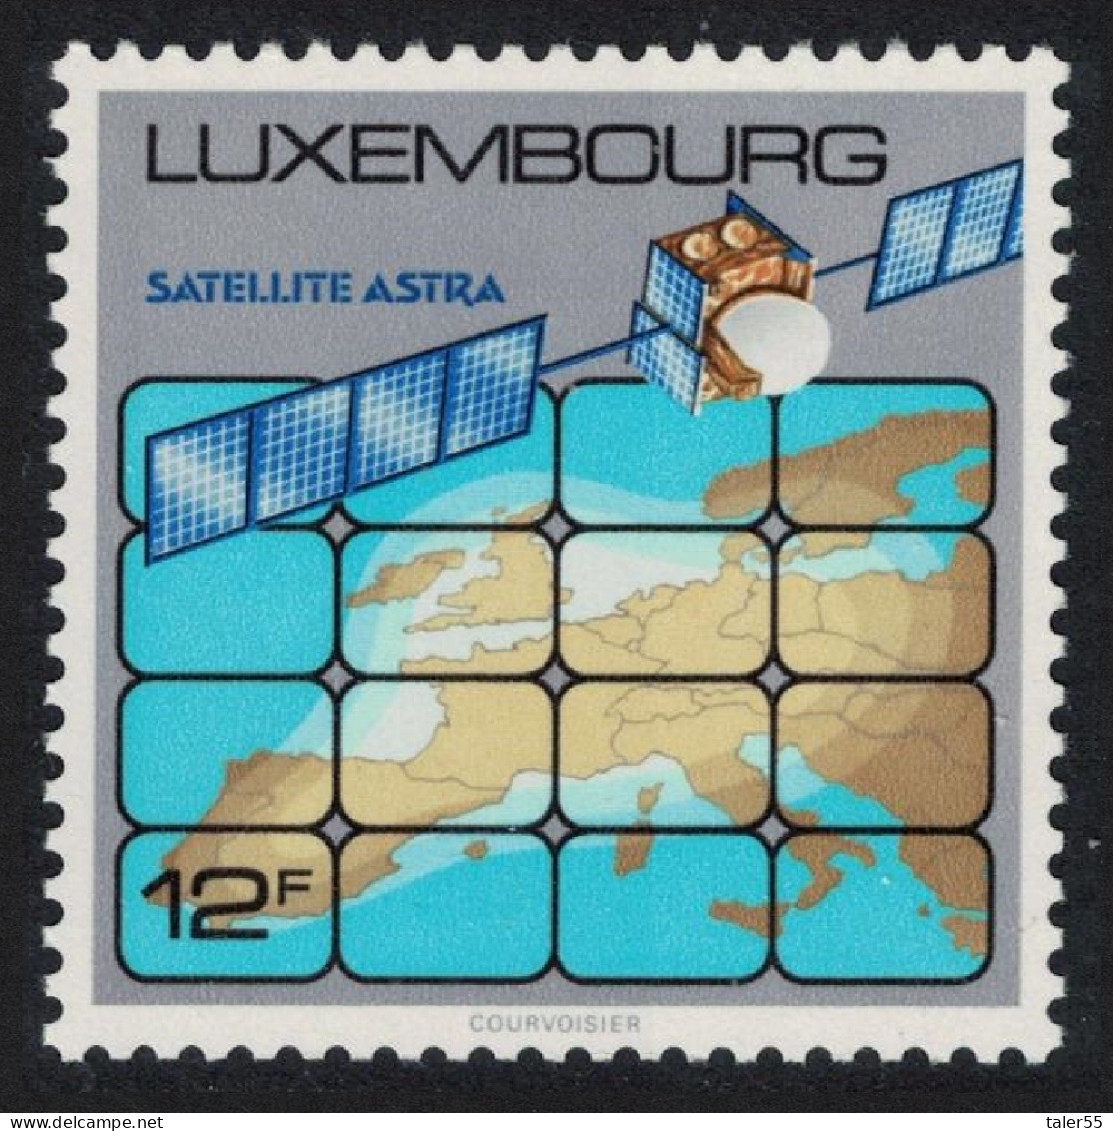 Luxembourg Launch Of 16-channel TV Satellite 1989 MNH SG#1245 MI#1218 - Ongebruikt